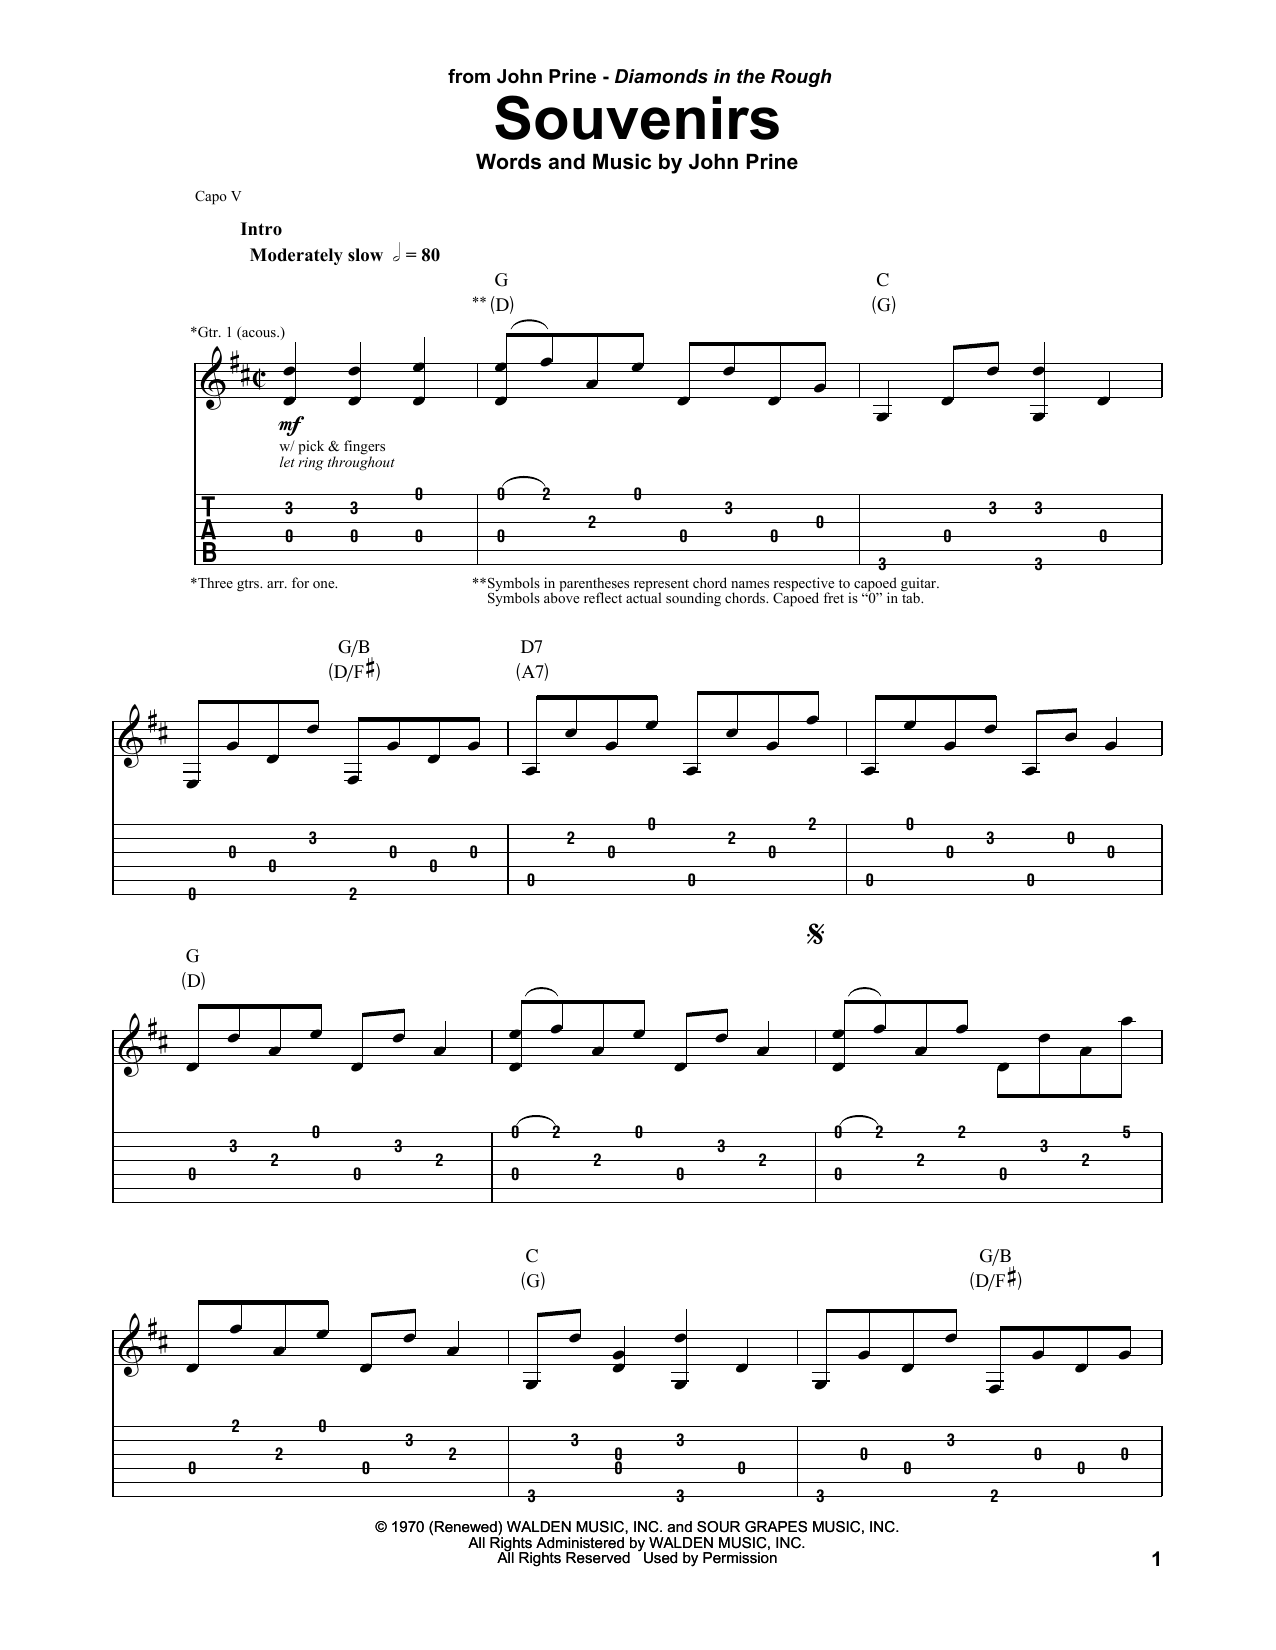 John Prine Souvenirs Sheet Music Notes & Chords for Guitar Tab Play-Along - Download or Print PDF